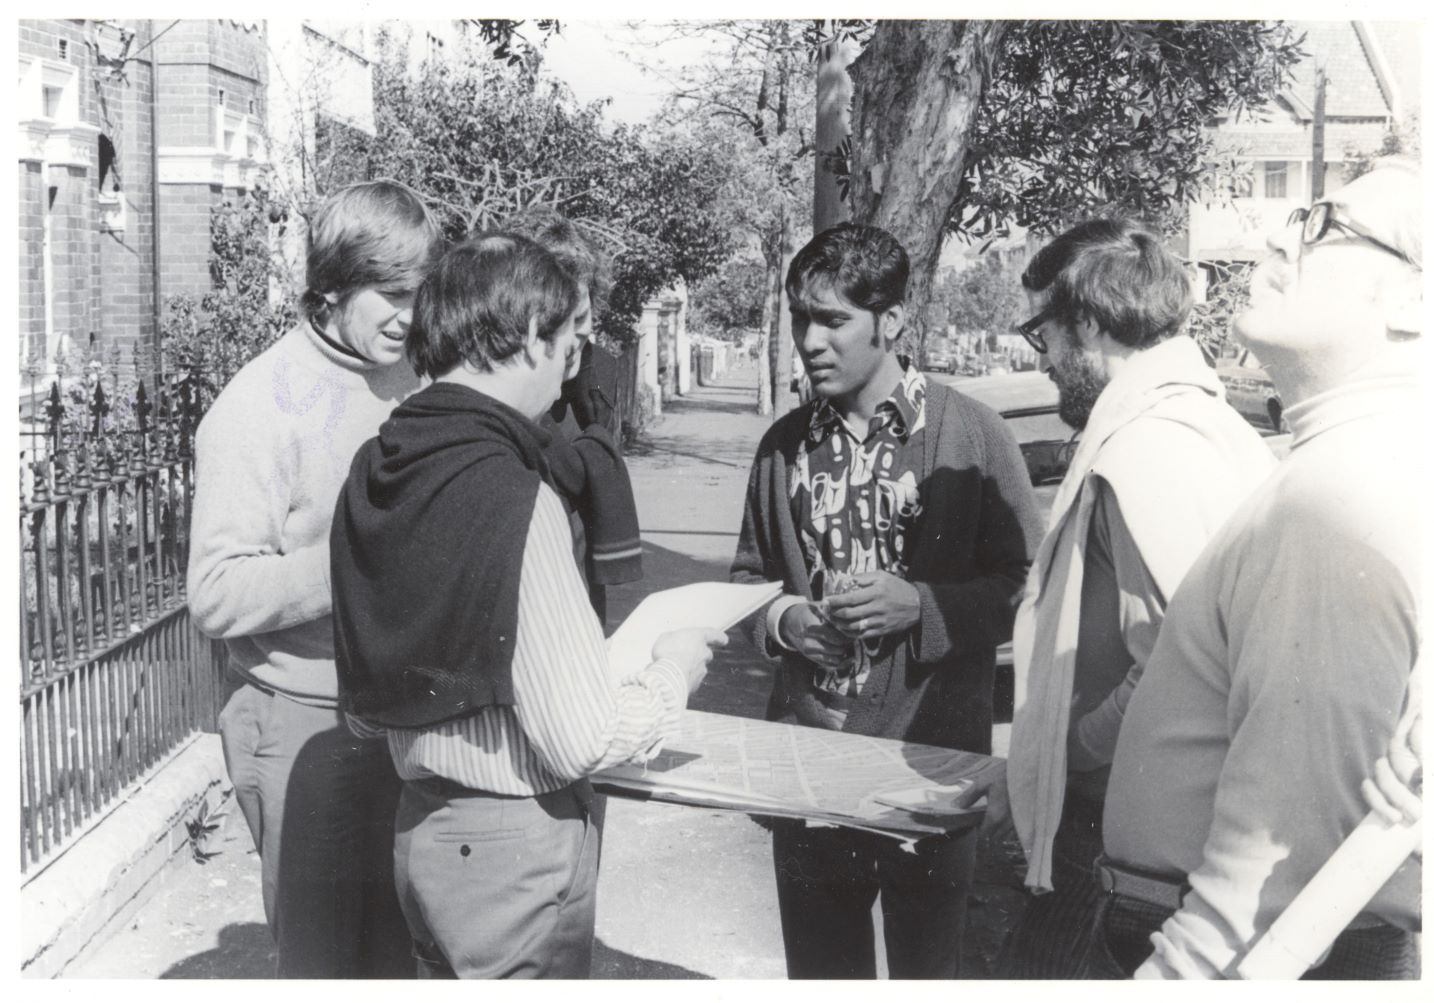 Peru Perumal; Glebe Society Planning Committee; Wigram Road September 1972